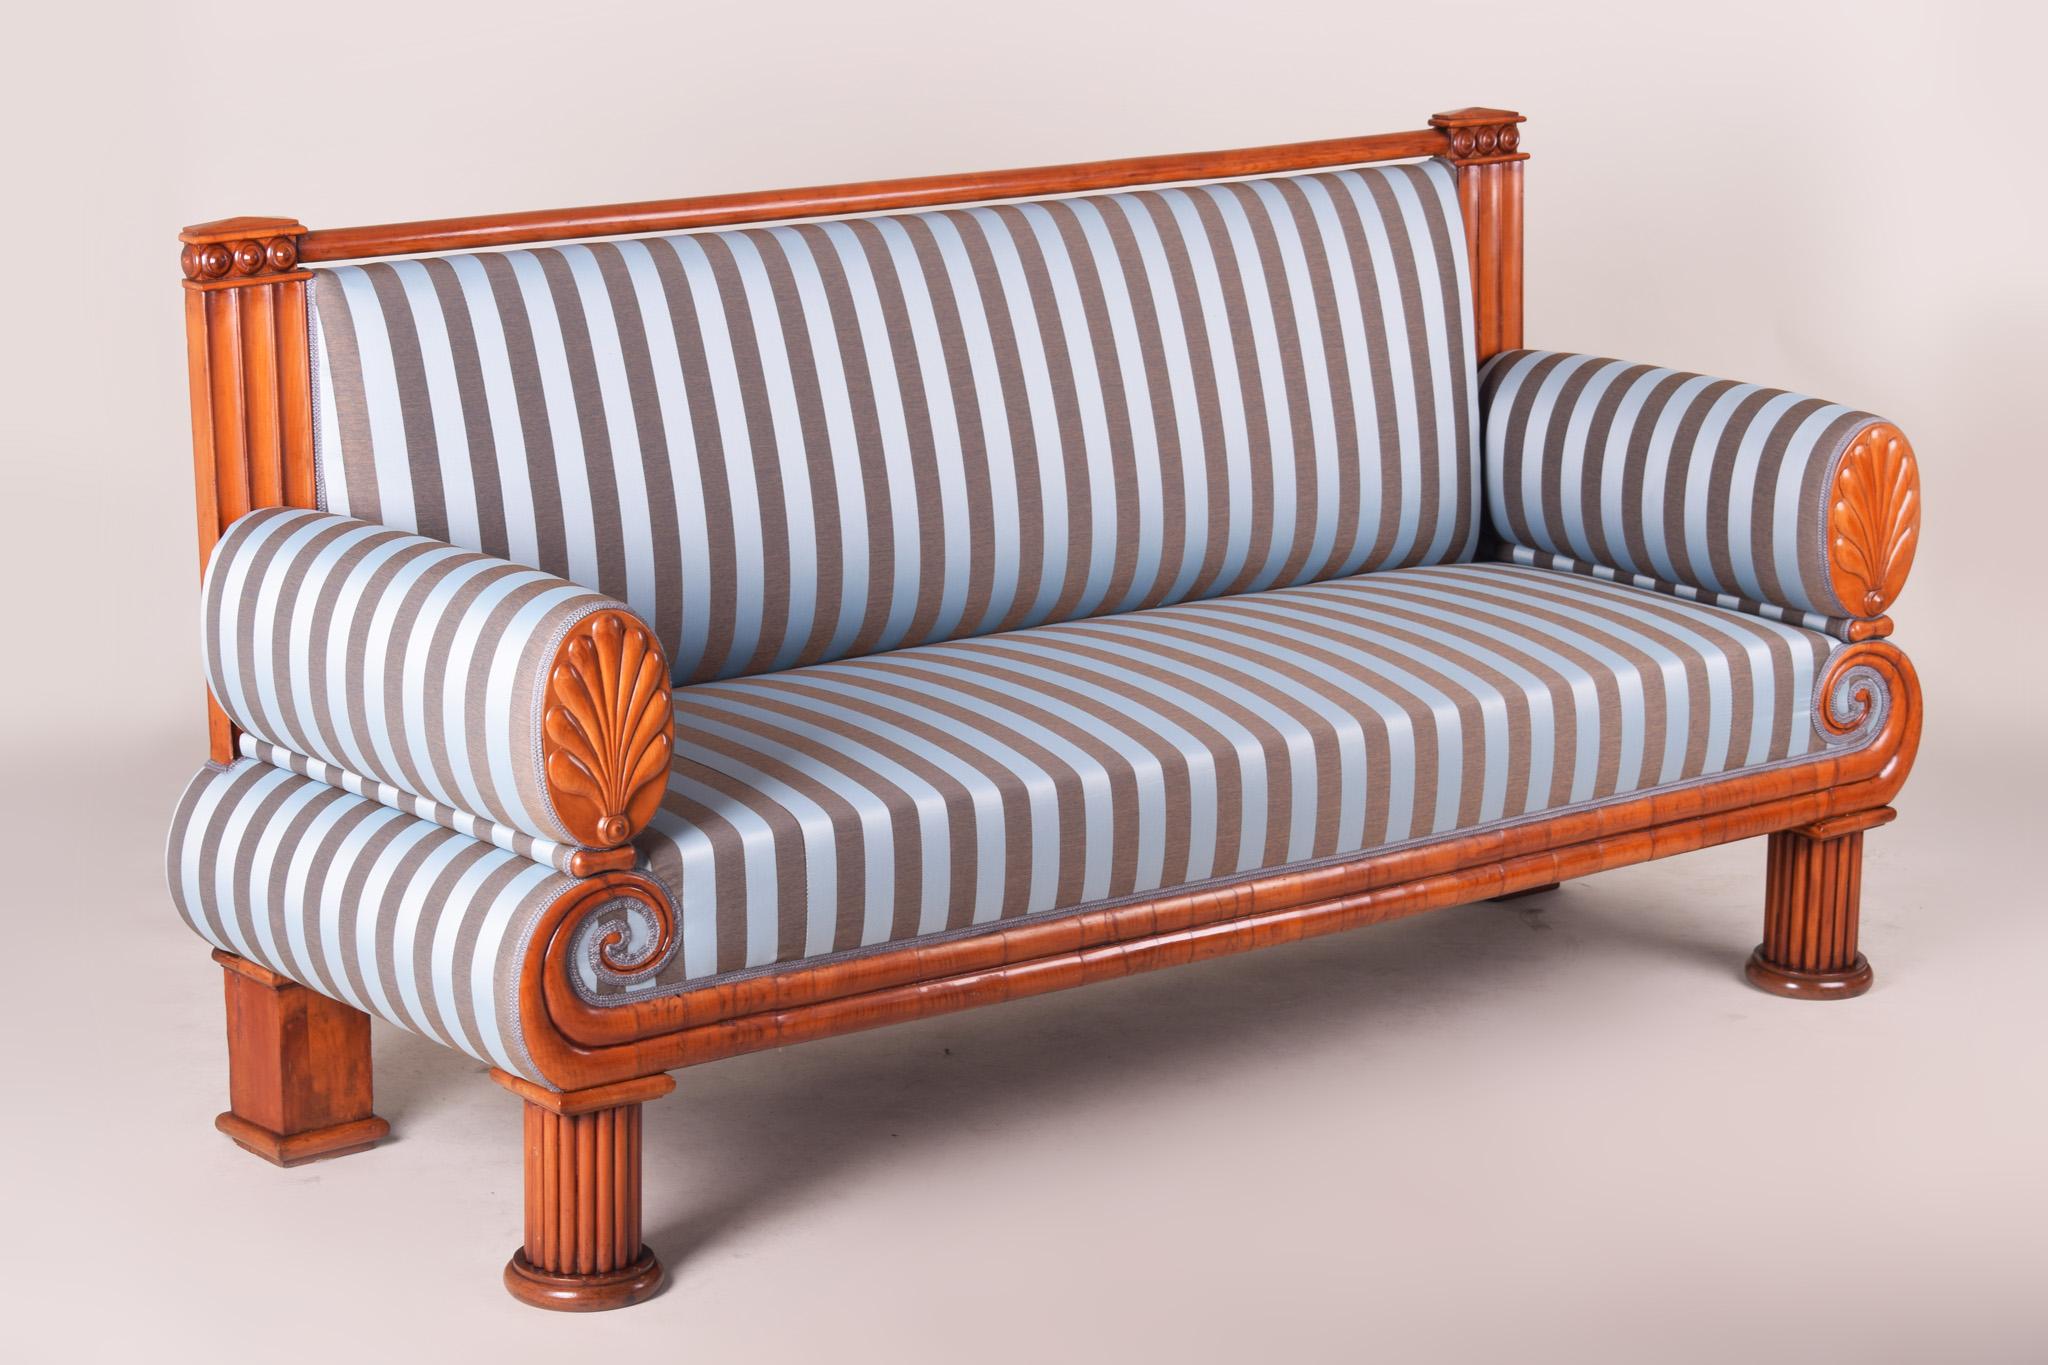 Fabric 19th Century Biedermeier Sofa, Cherrywood, 1820s, Made in Czechia, Restored For Sale